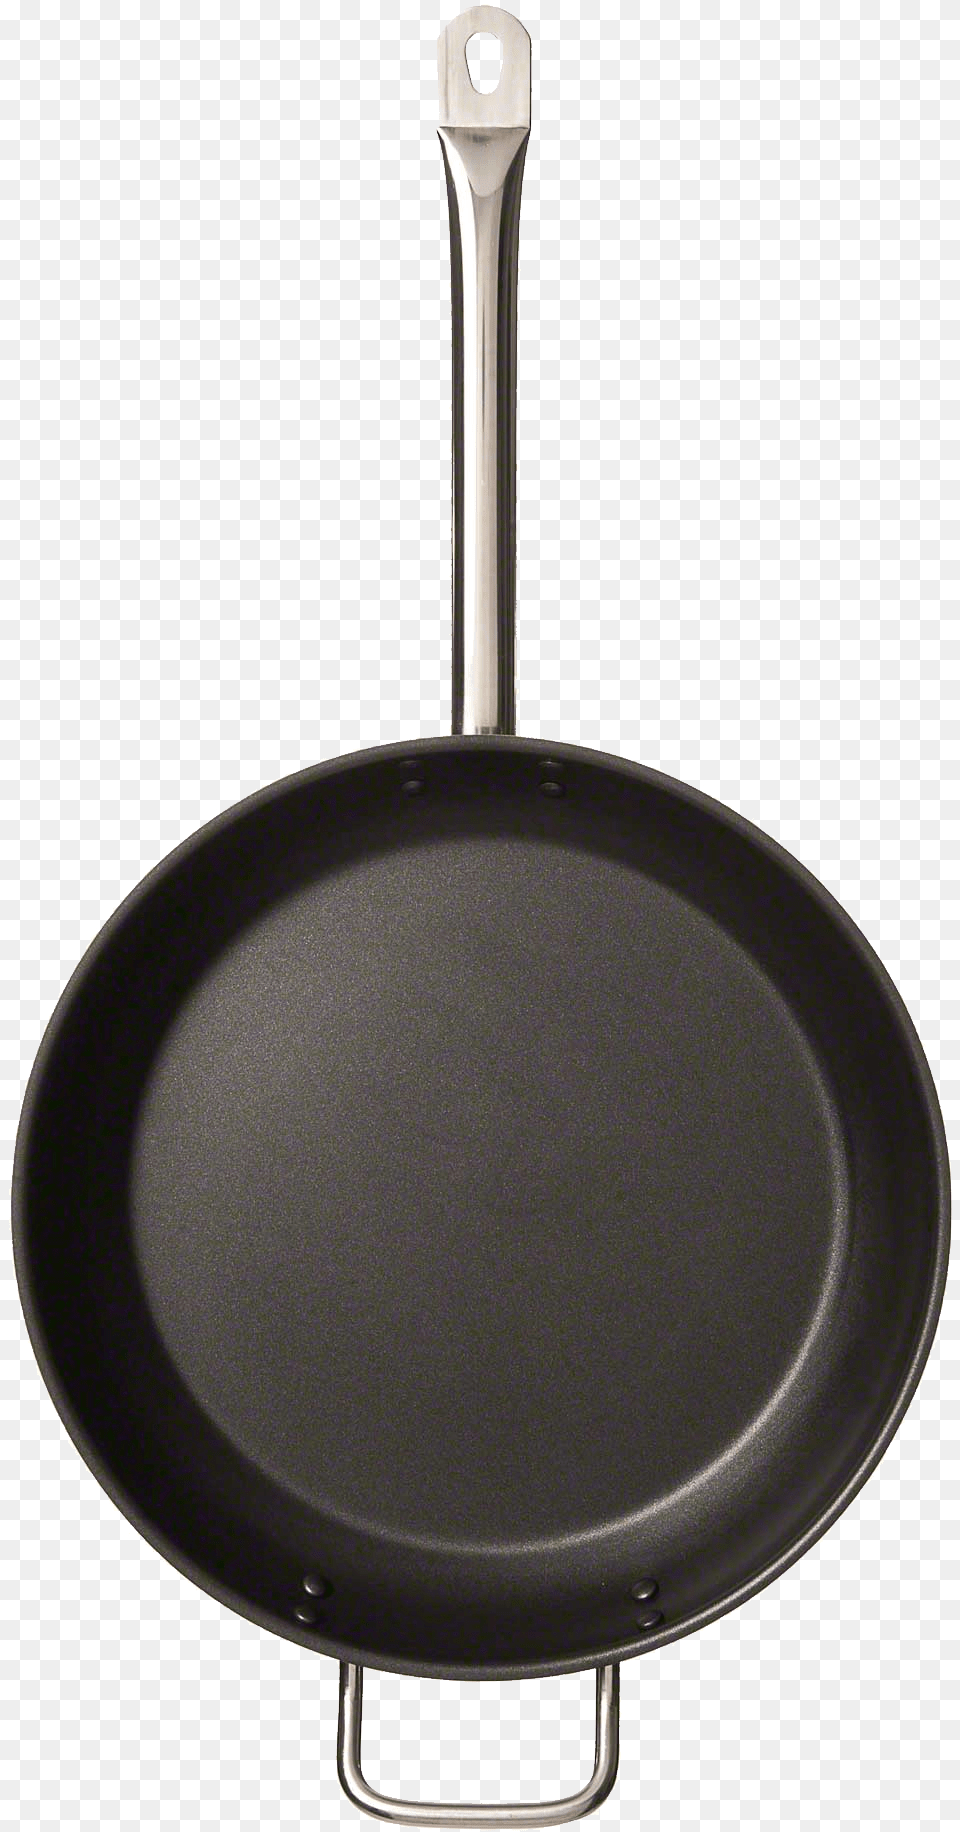 Image, Cooking Pan, Cookware, Frying Pan Free Transparent Png